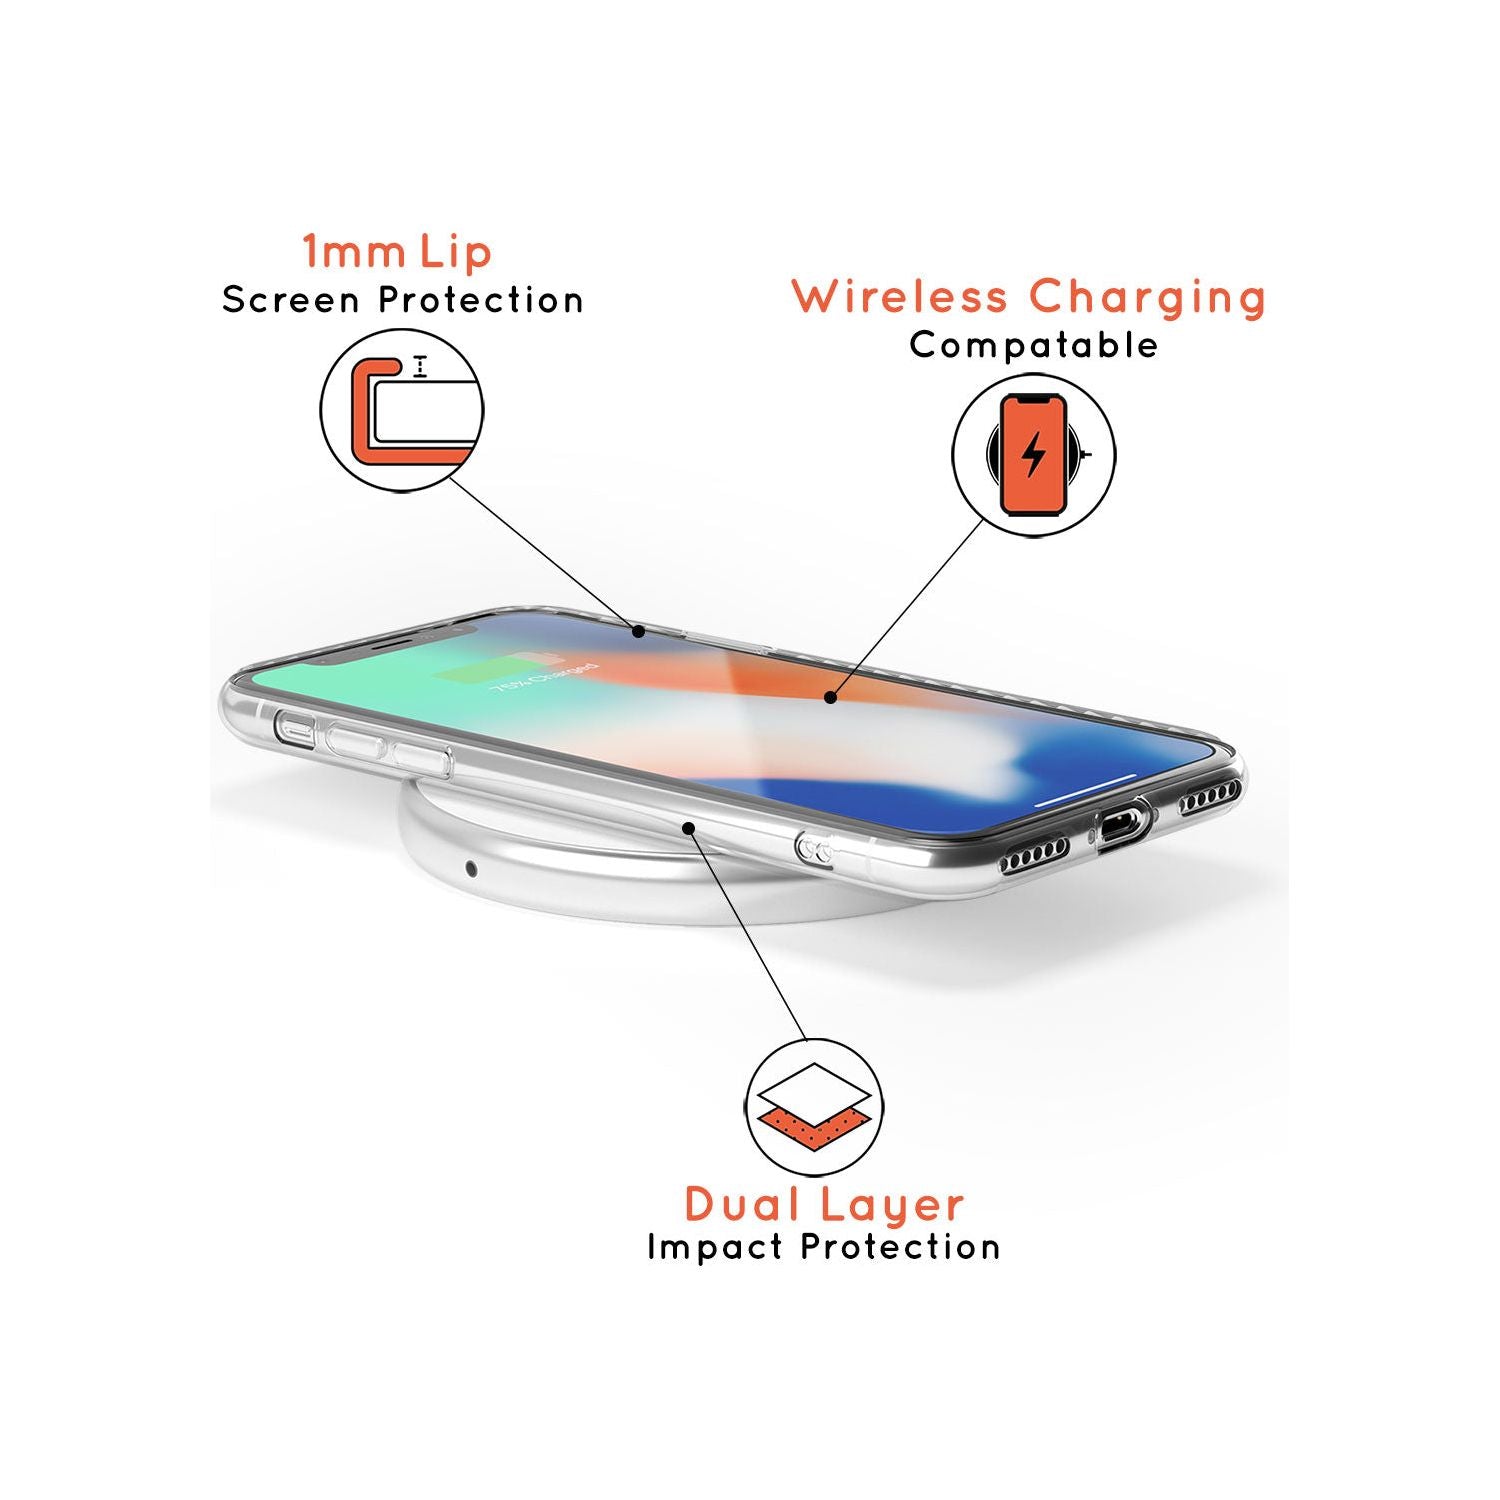 Large White Mandala Transparent Design Black Impact Phone Case for iPhone SE 8 7 Plus